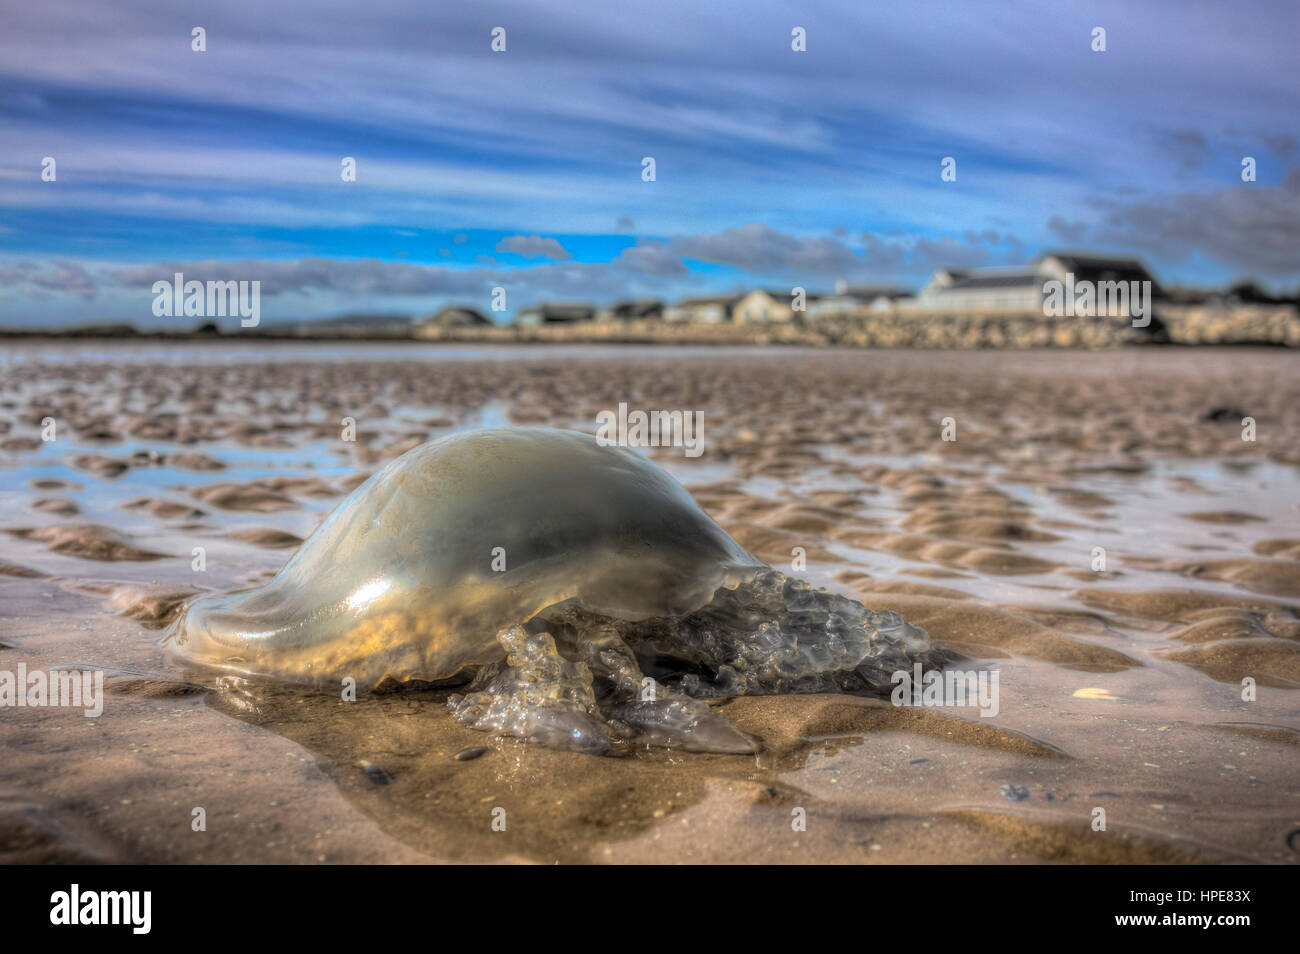 A beached Barrel Jellyfish (Rhizostoma pulmo) washed up on Southerness Beach, Dumfries and Galloway Scotland, UK. Stock Photo